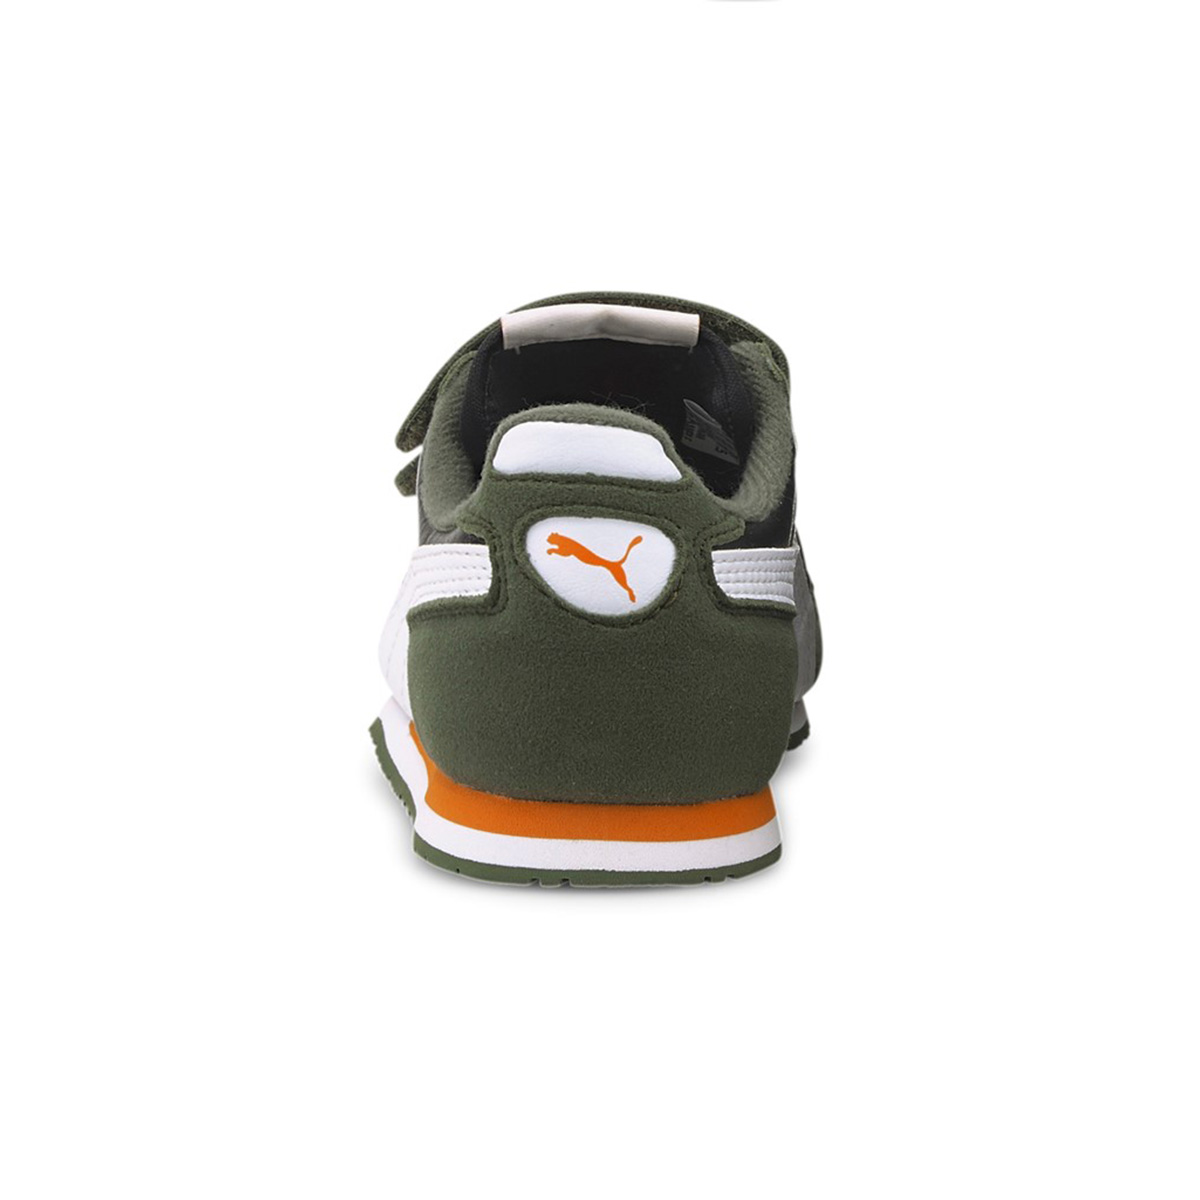 PUMA Cabana Racer SL V PS Kids Sneaker Schuhe Grün 360732 